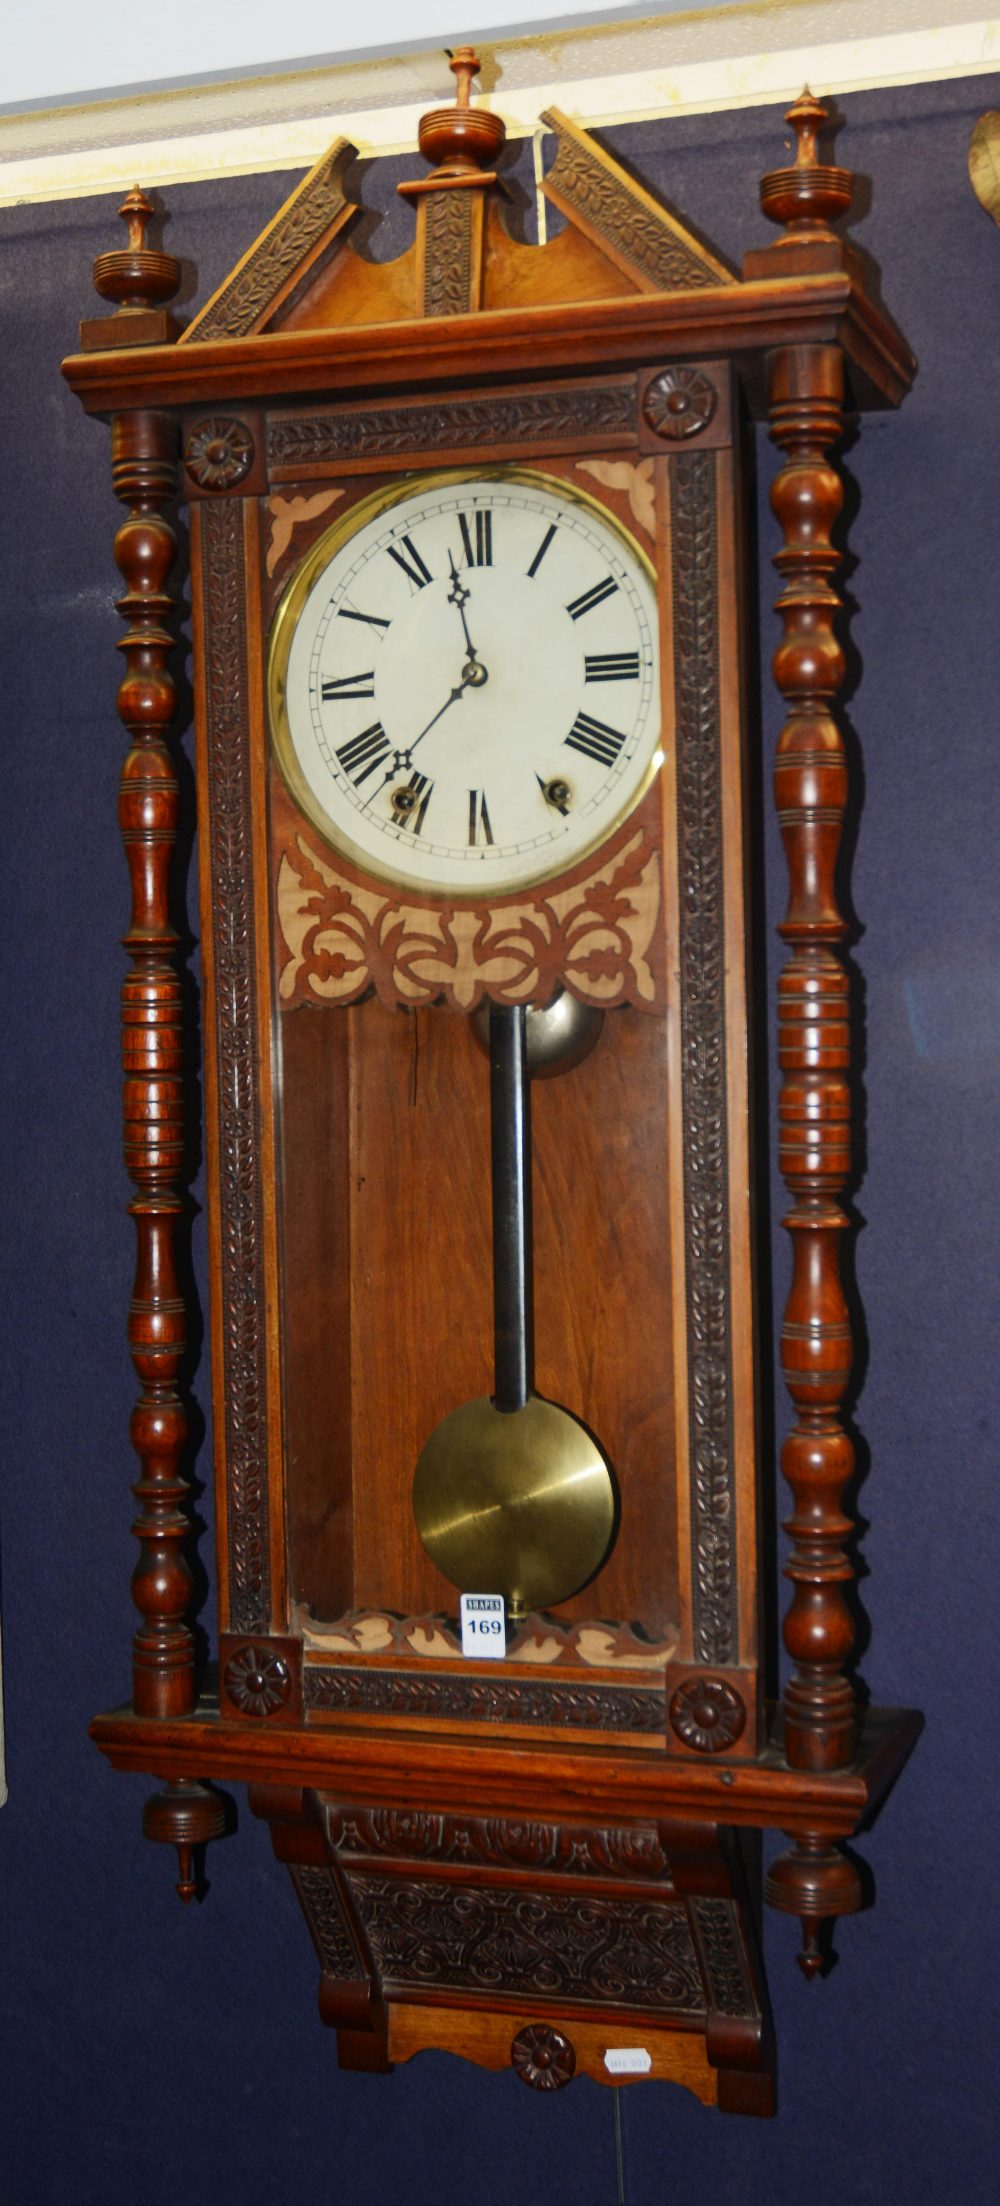 A 19th century walnut Vienna clock, with eight day movement striking bell, the broken pediment